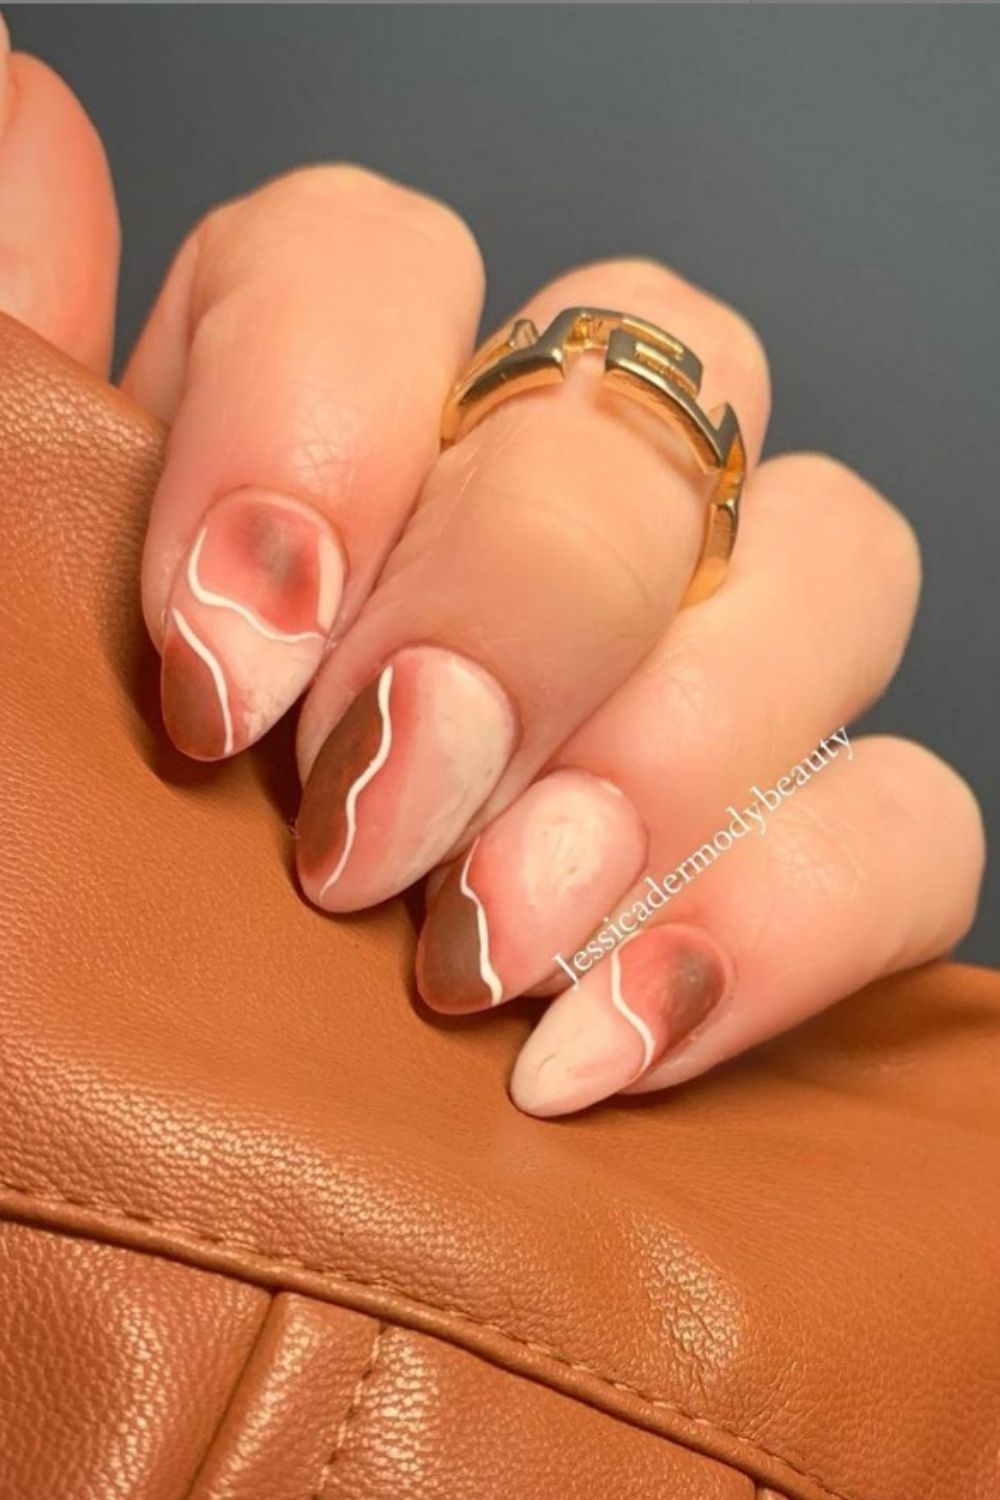 40 Cute Almond Short Acrylic Nails For Summer Nail Design